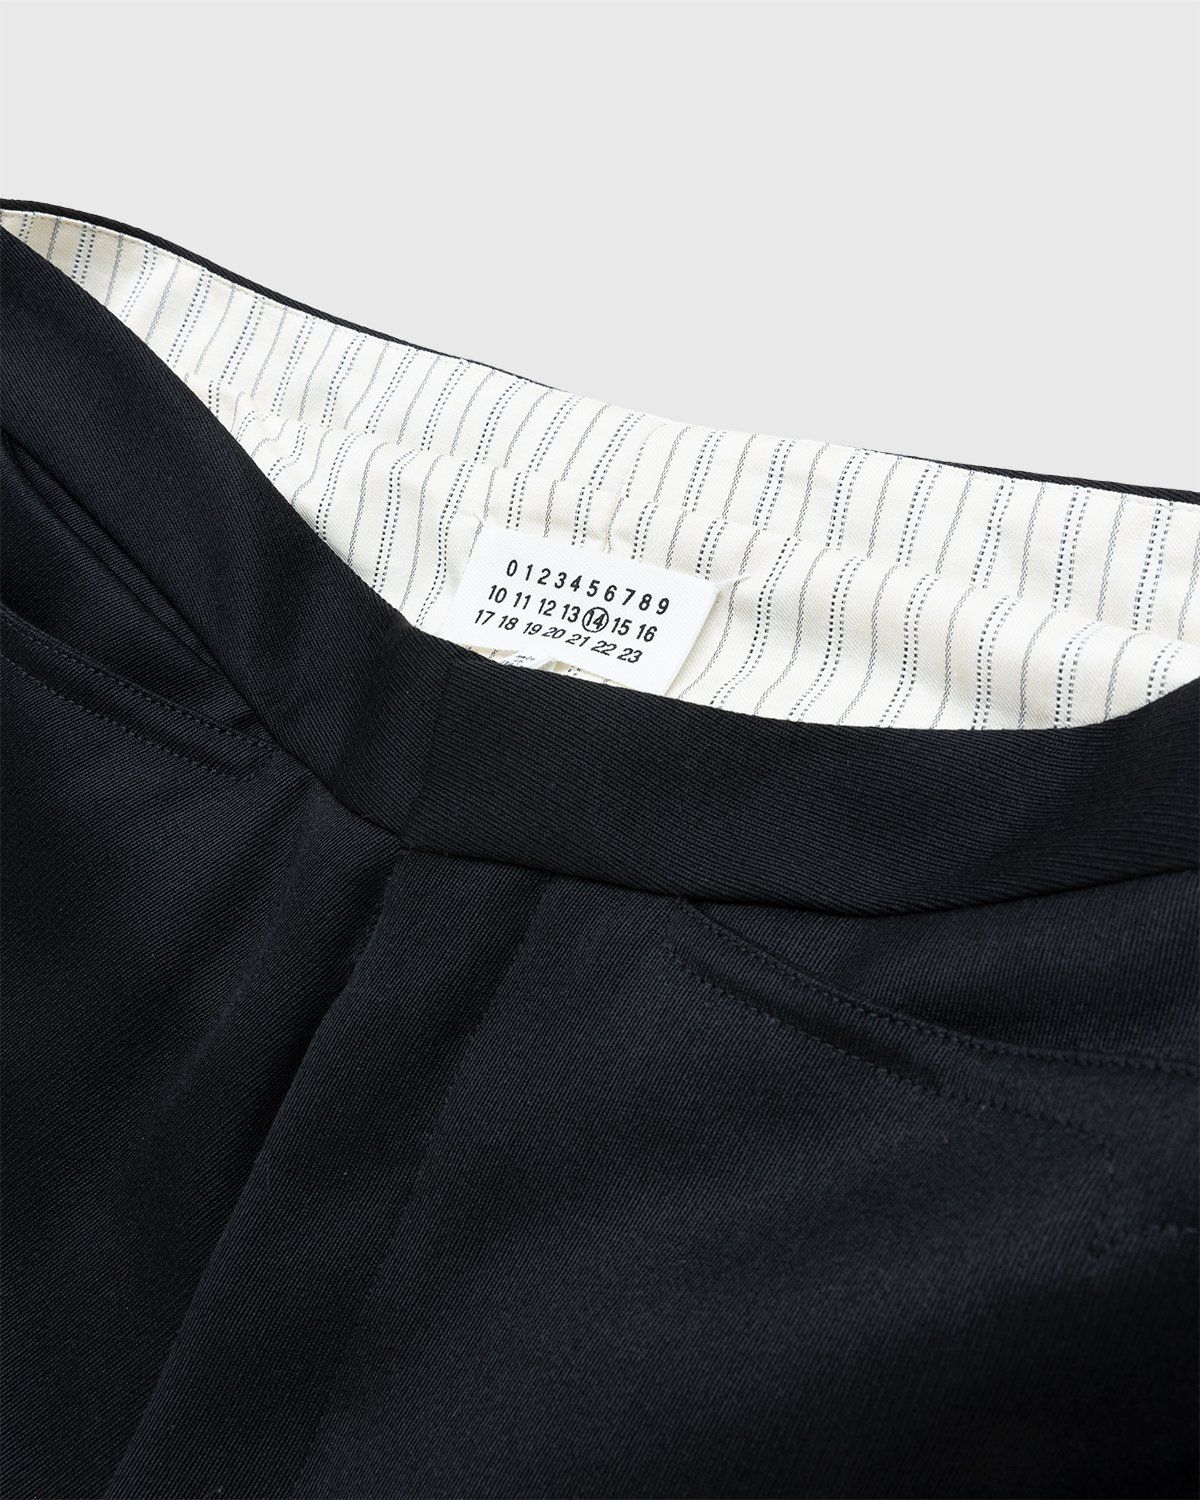 Maison Margiela – Gabardine Trousers Black - Trousers - Black - Image 3